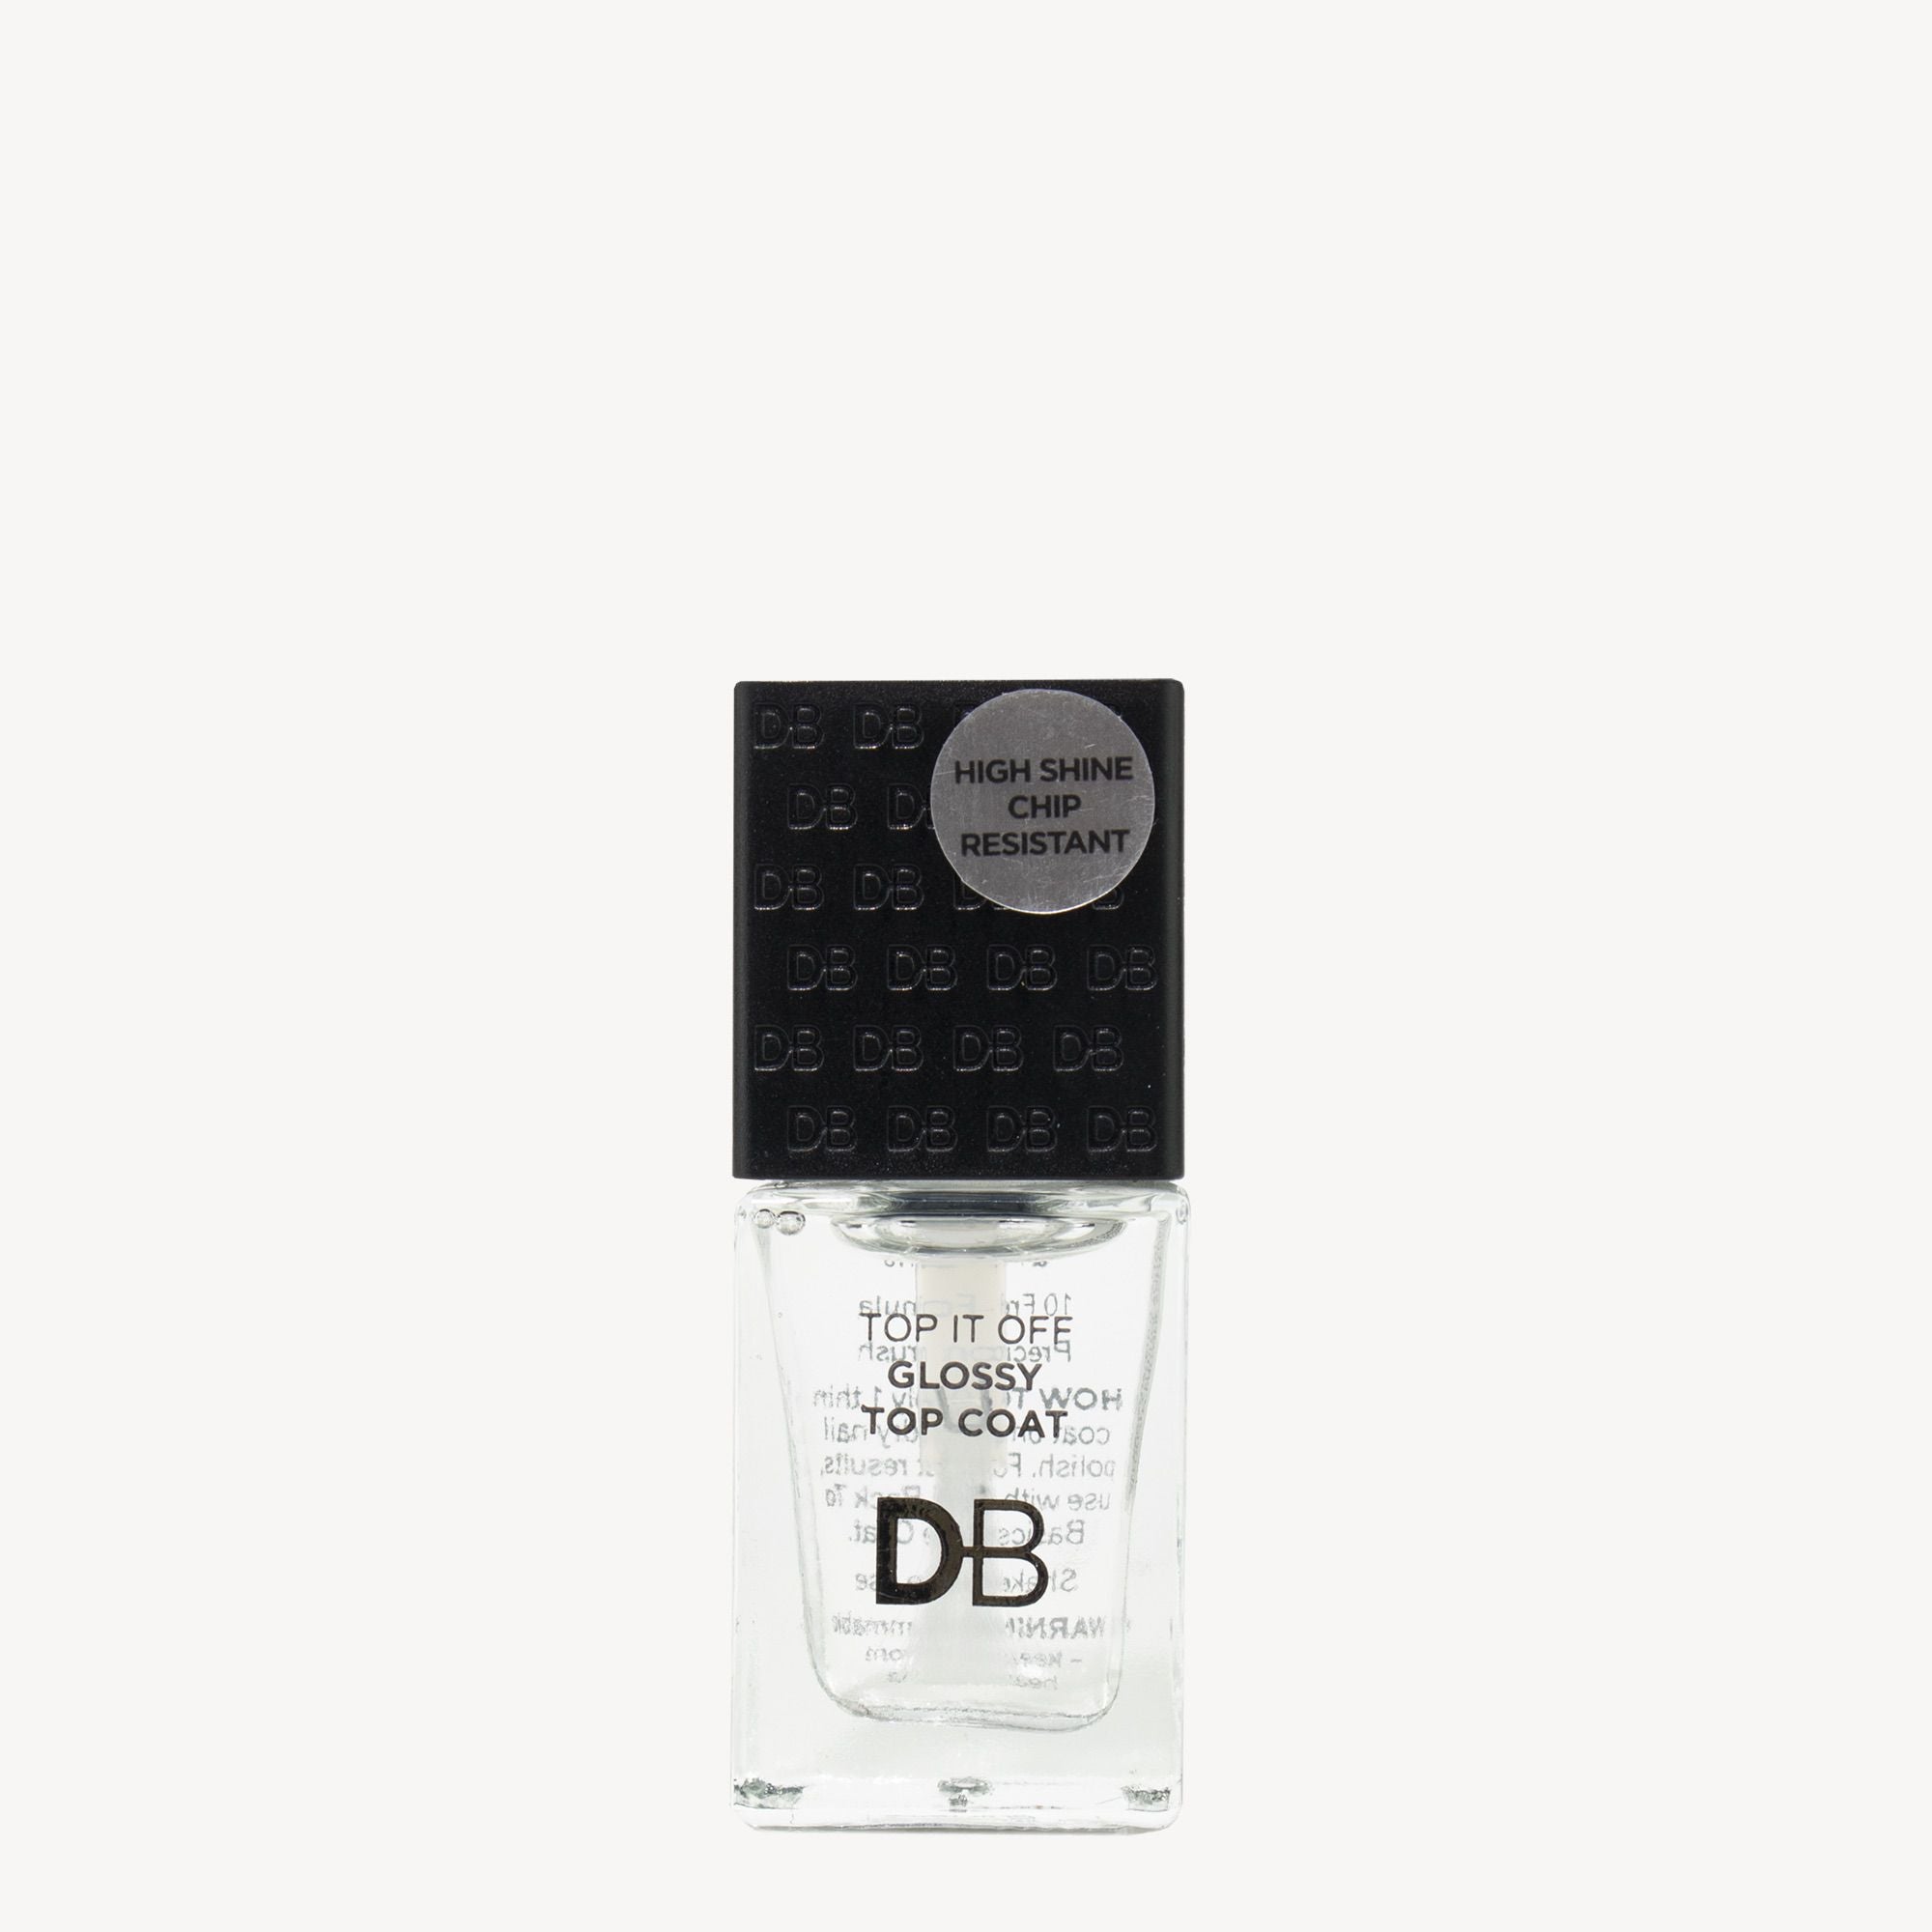 Top It Off Glossy Top Coat Nail Polish | DB Cosmetics